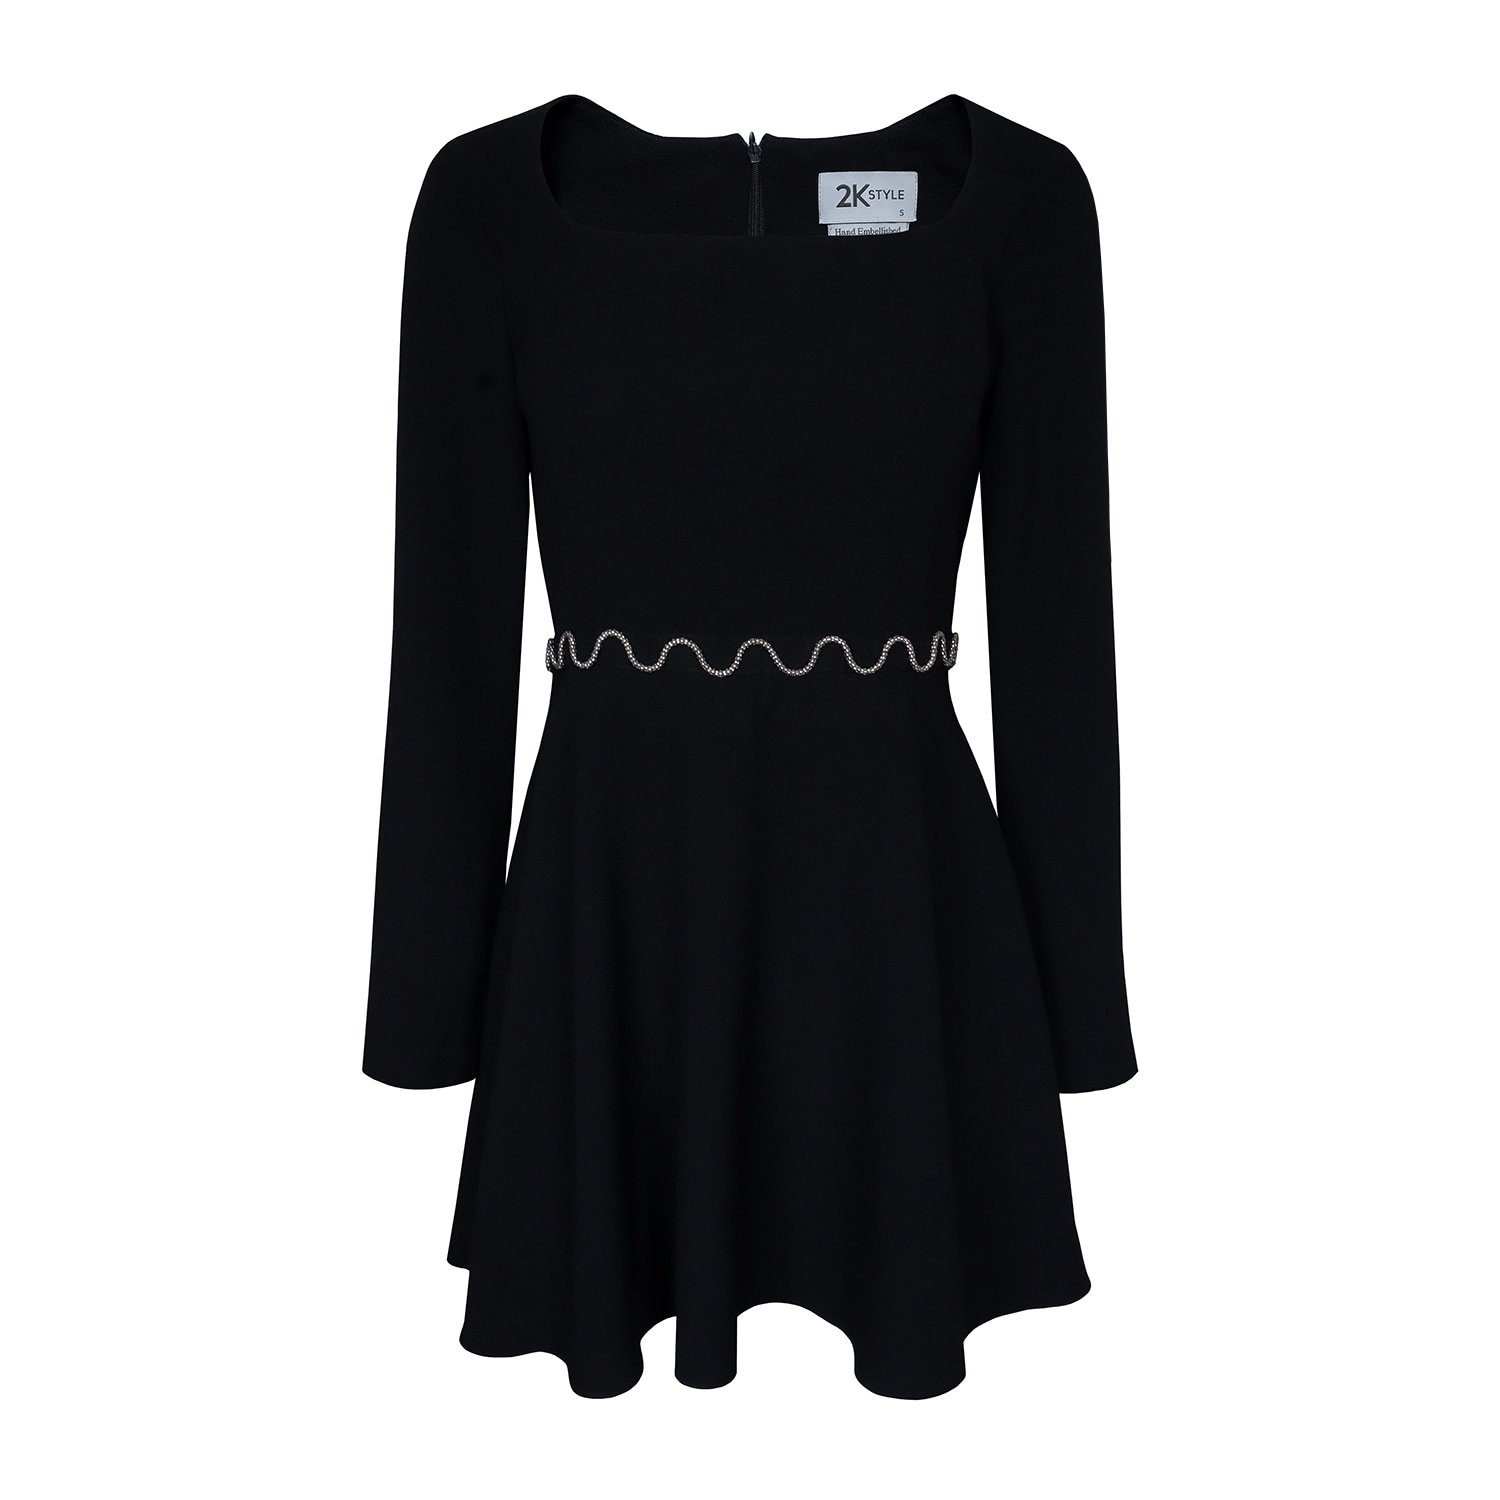 Women’s Brigitte Chain-Embellished Crepe Mini Dress - Black Large 2Kstyle